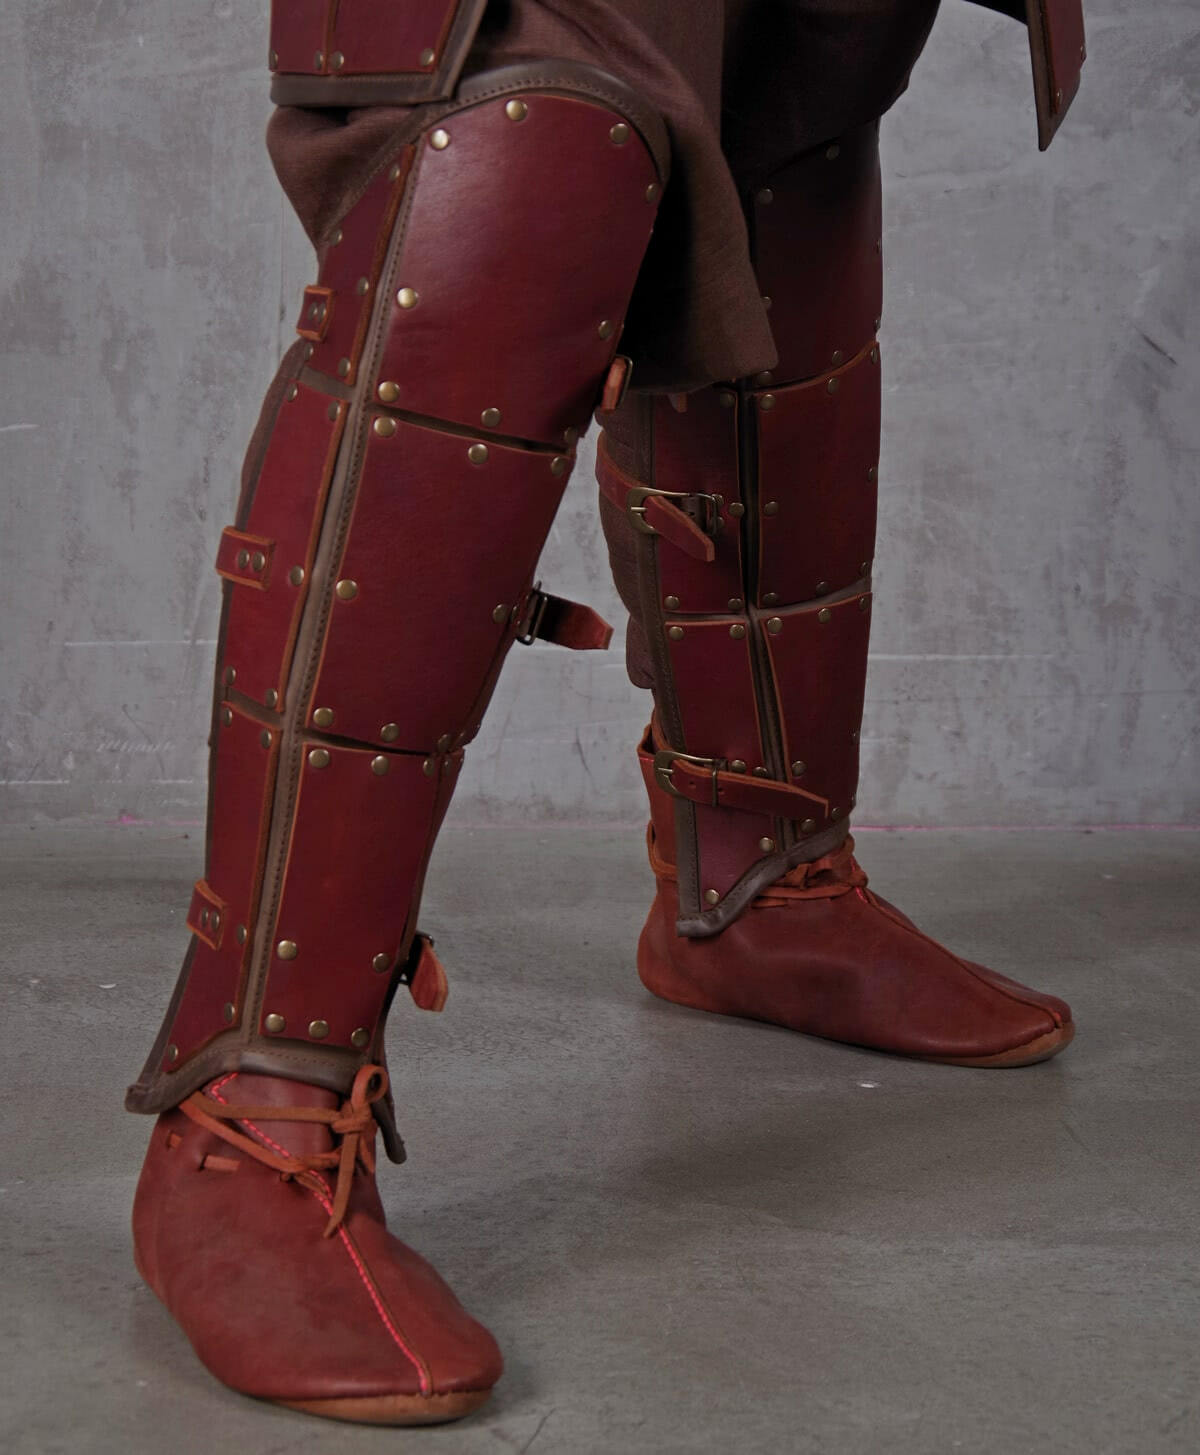 Leather armor leather leg armor